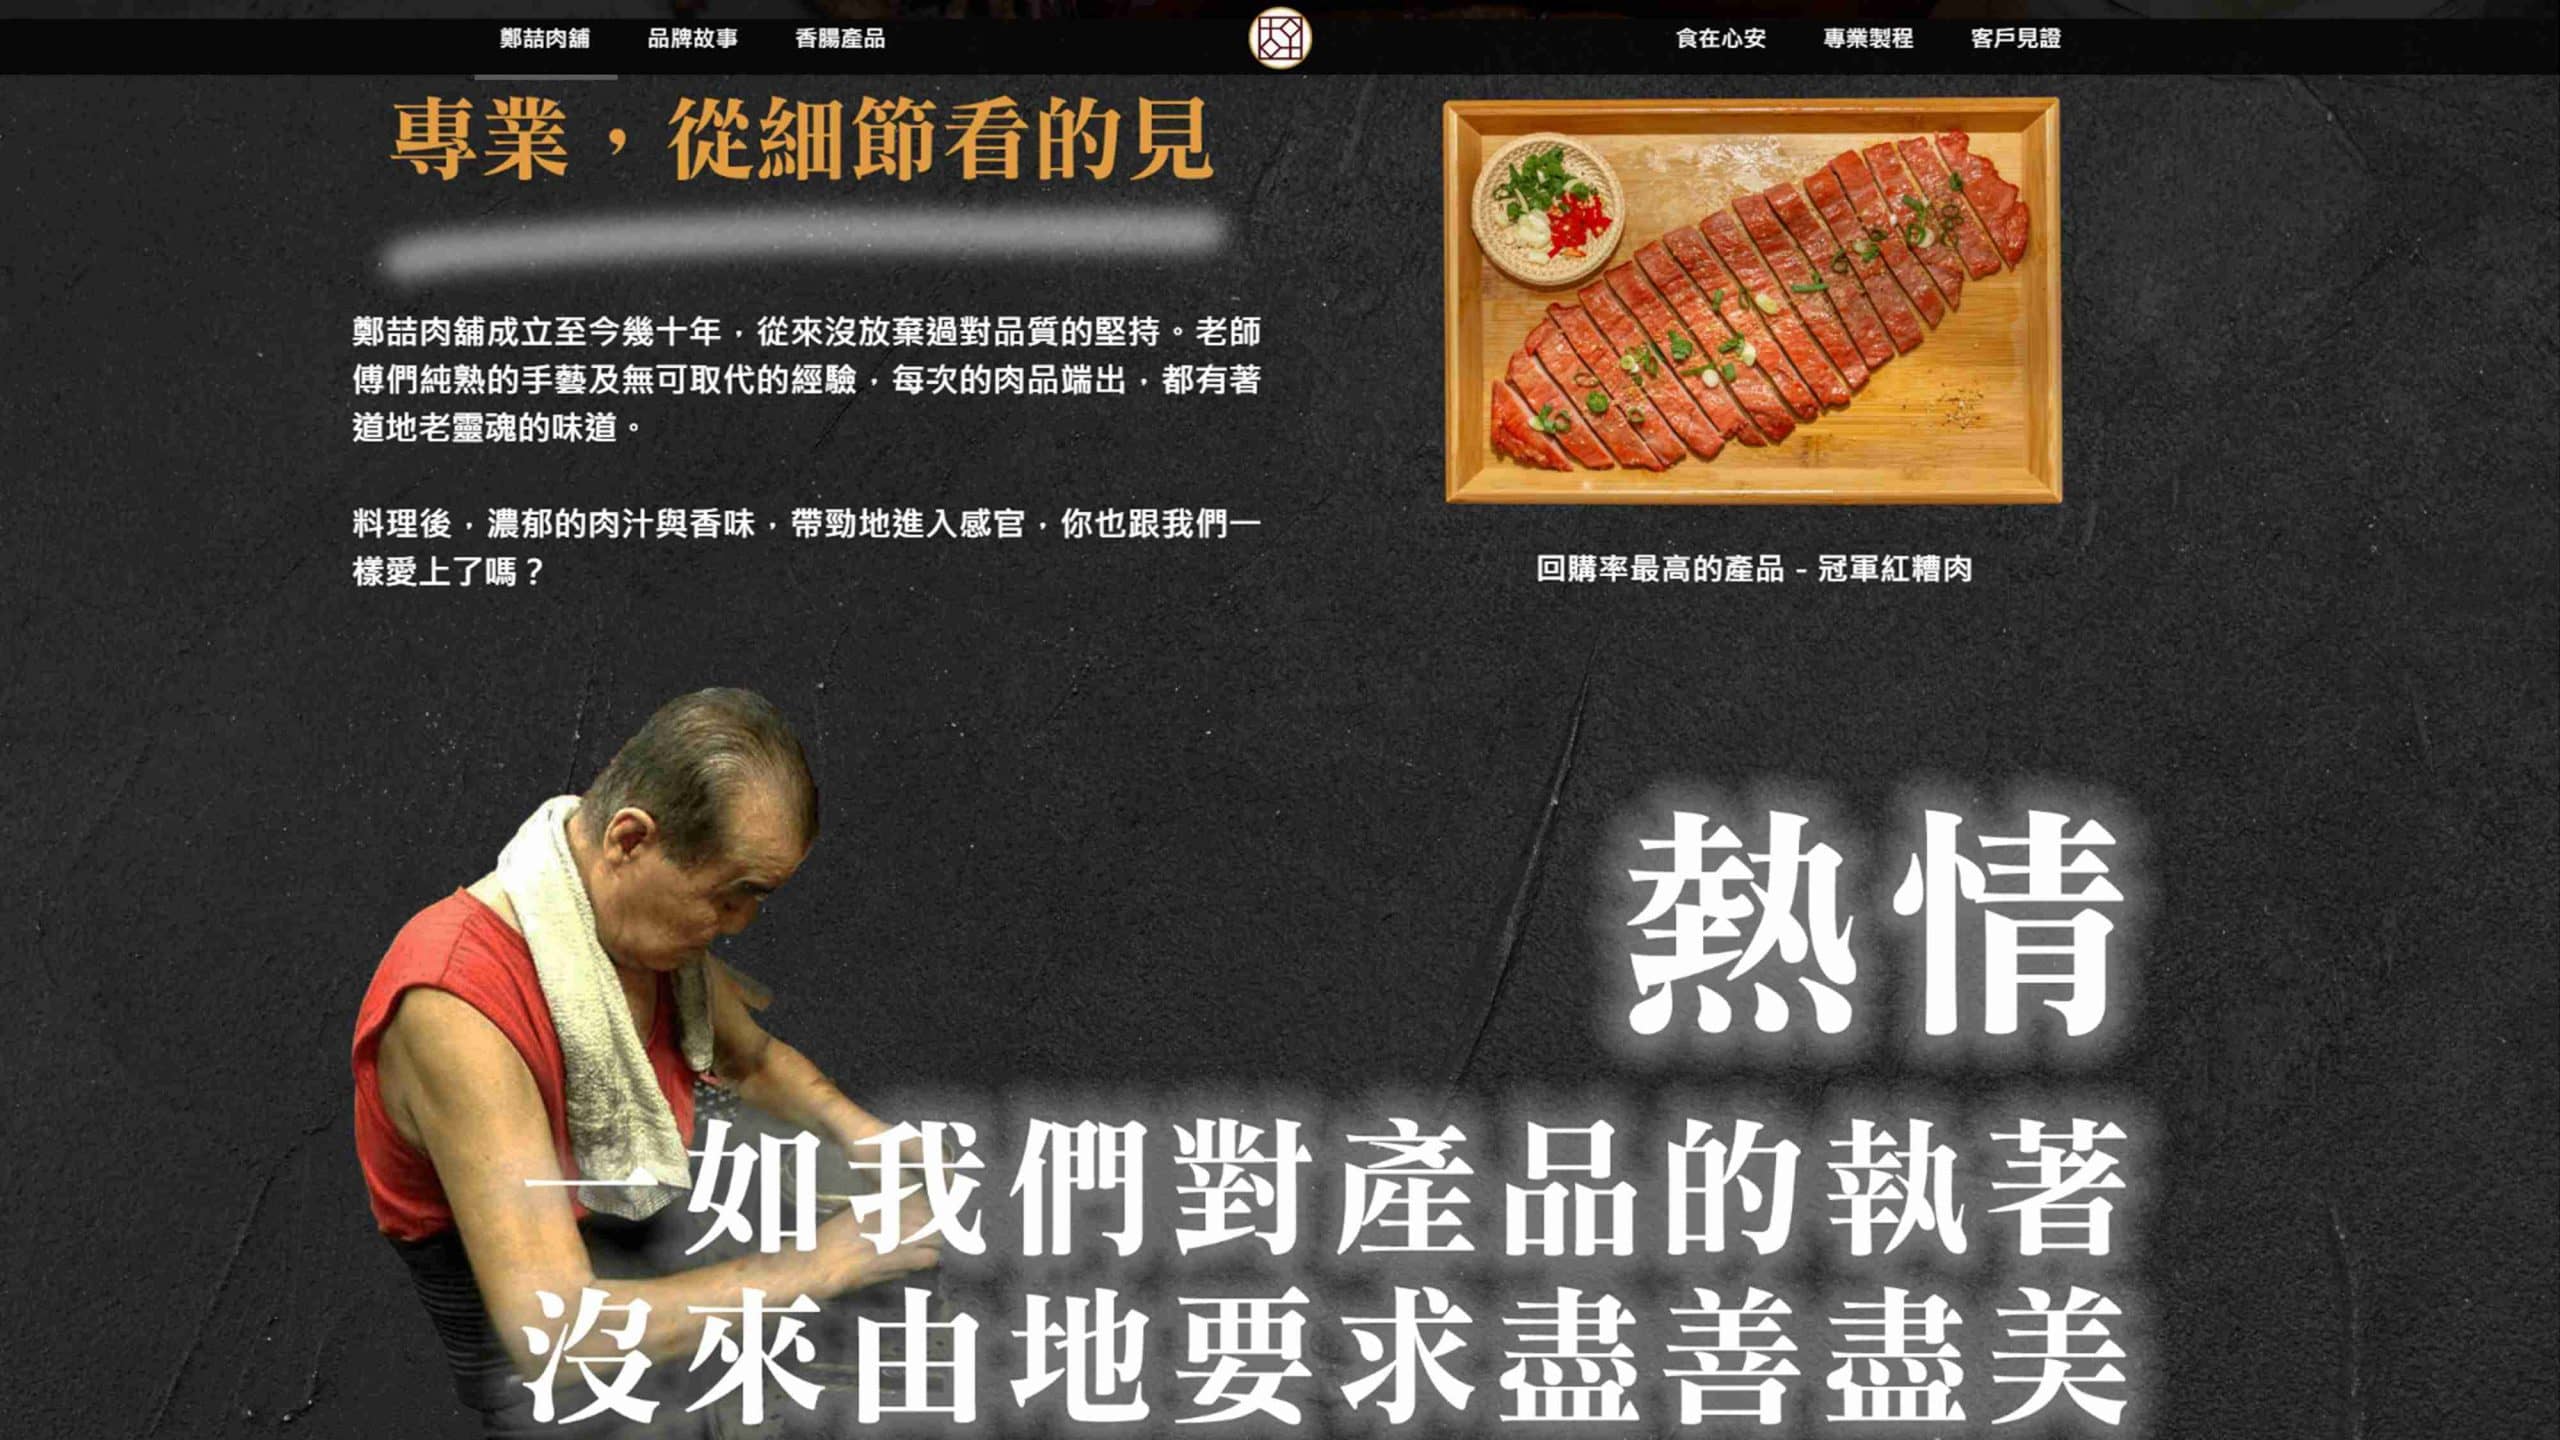 tainan-sausage-featured-image